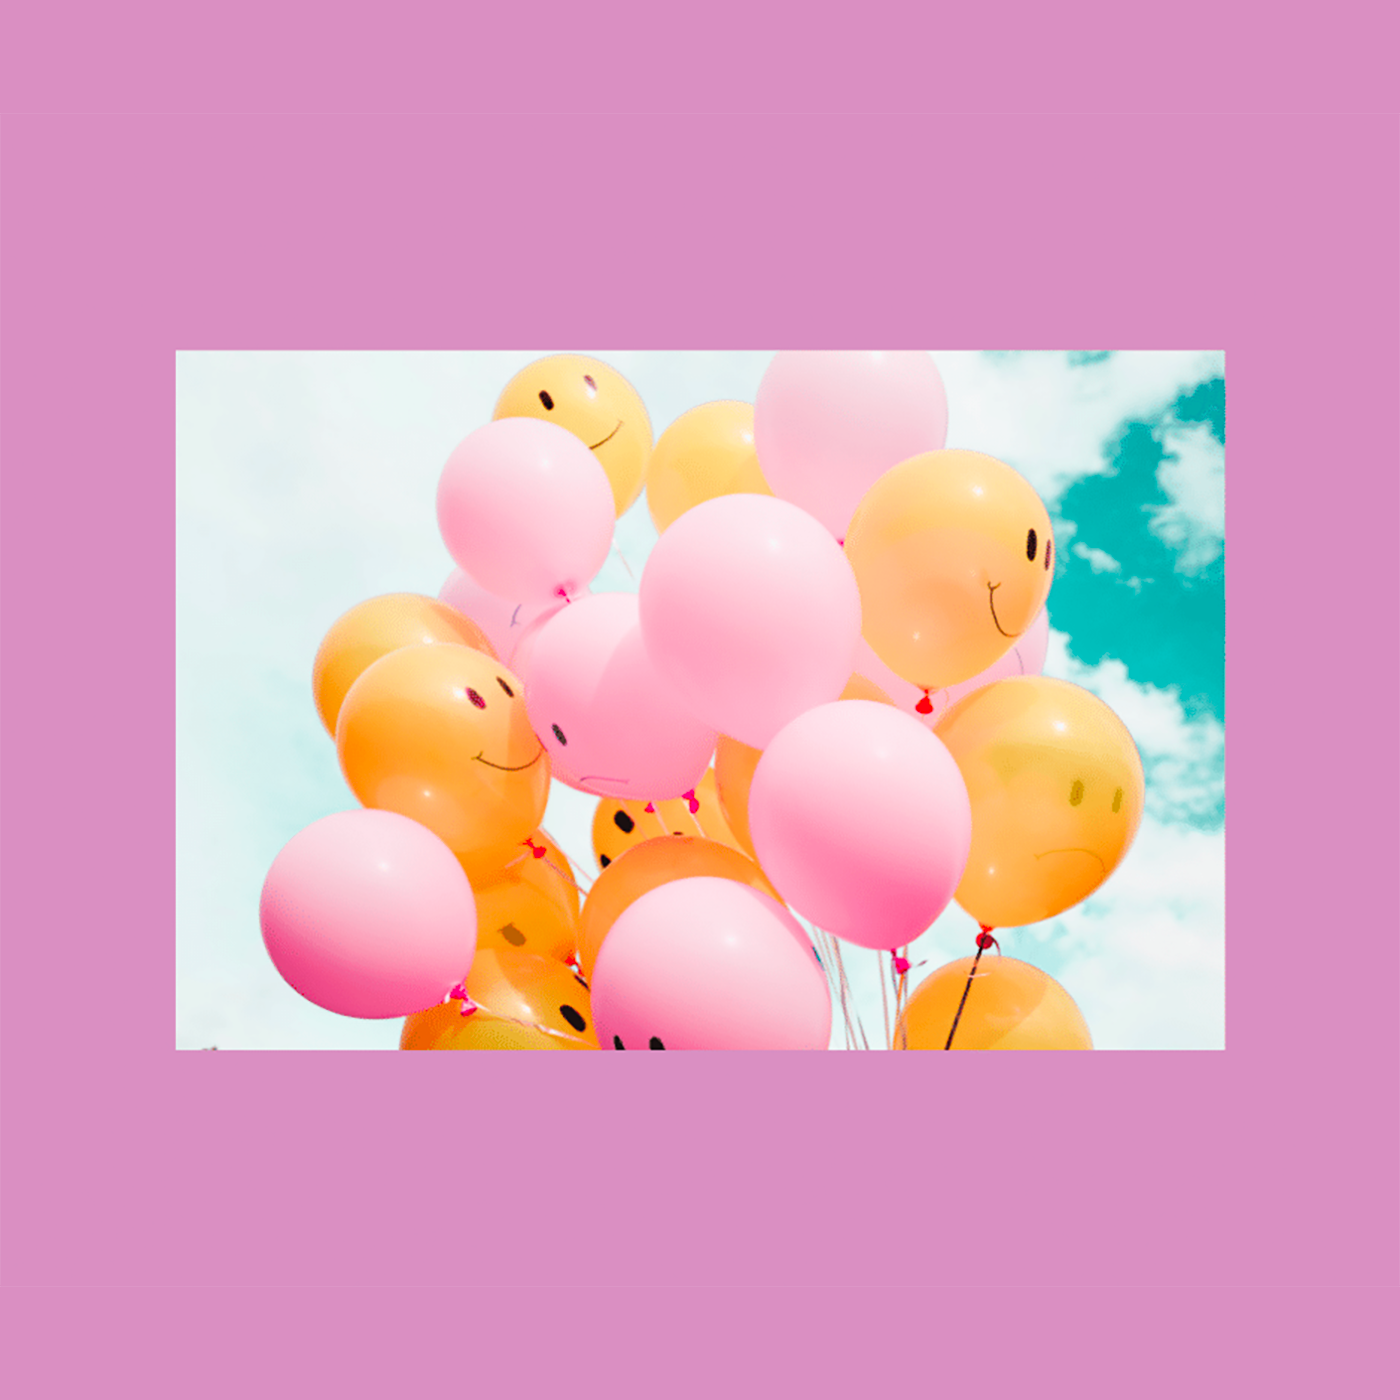 solpren_guide_balloons